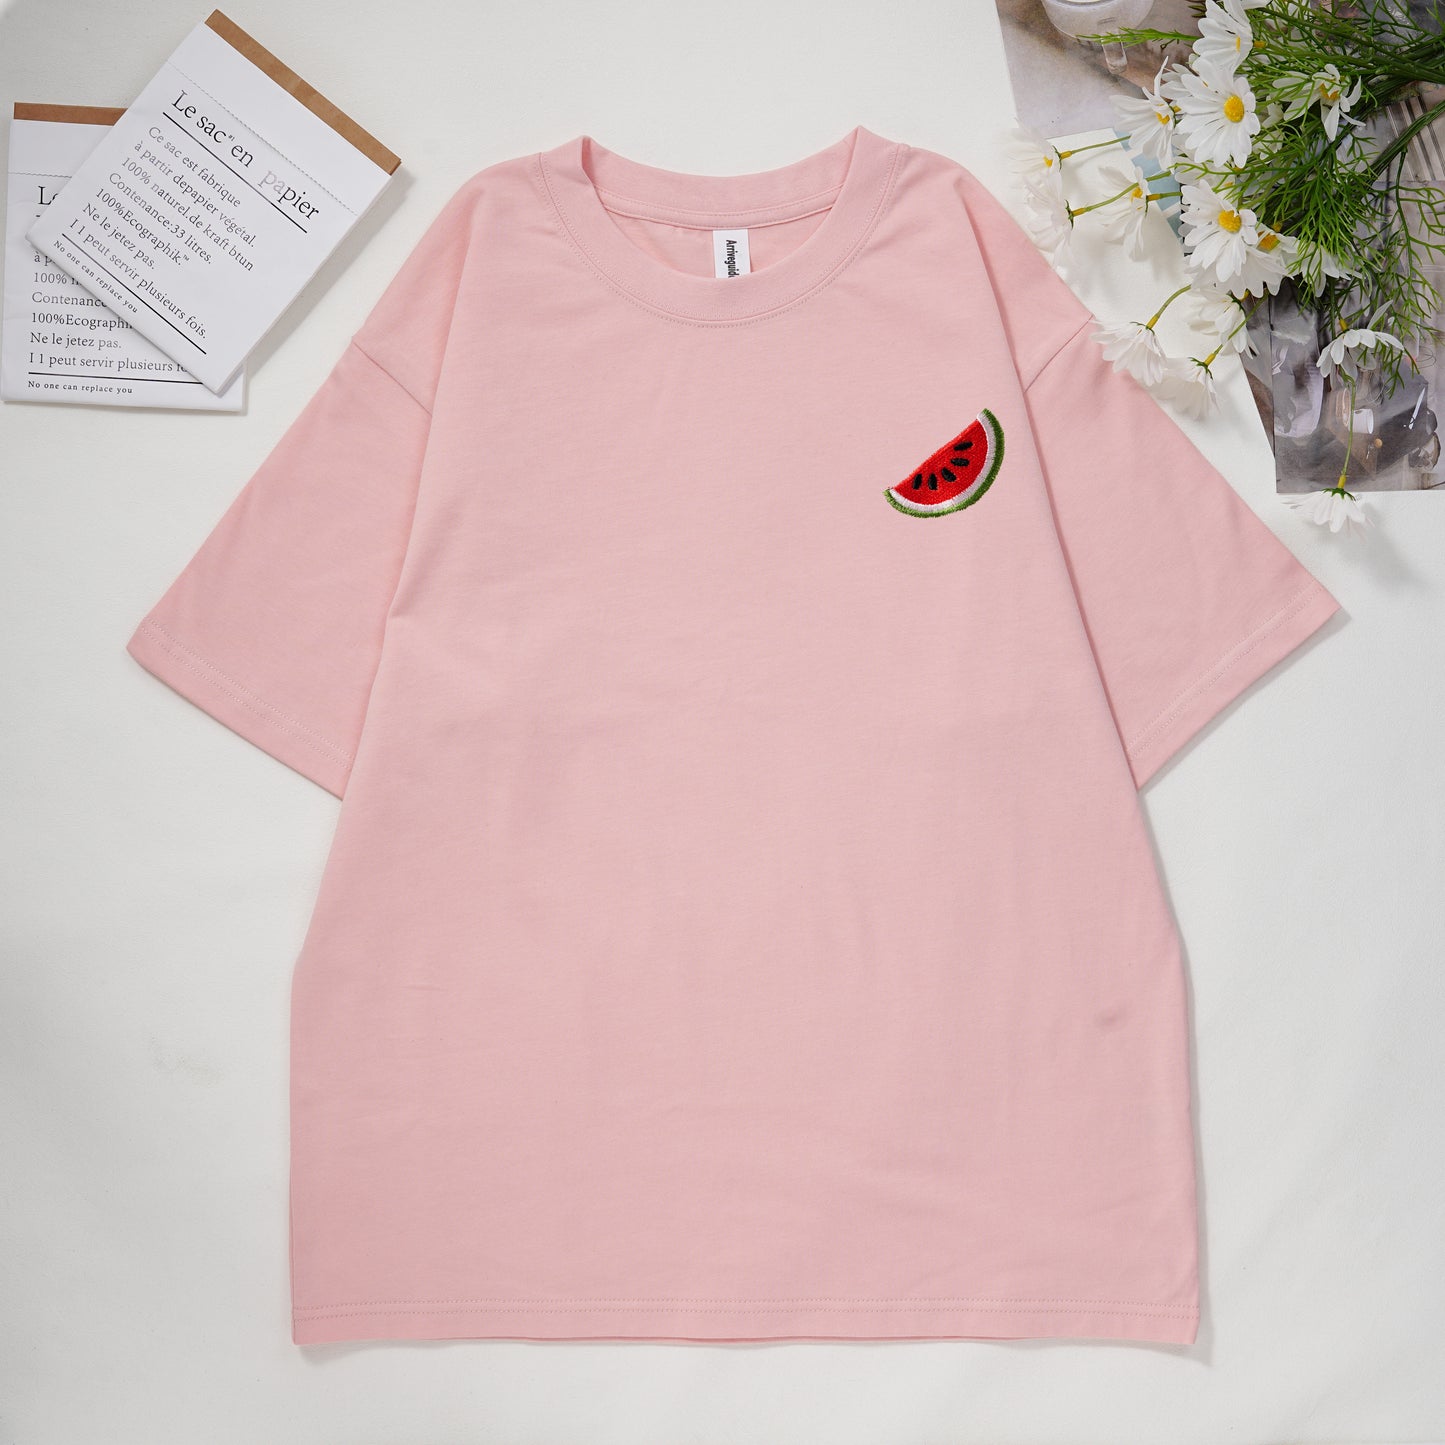 Summer Essentials - Fruit Embroidery T-Shirt